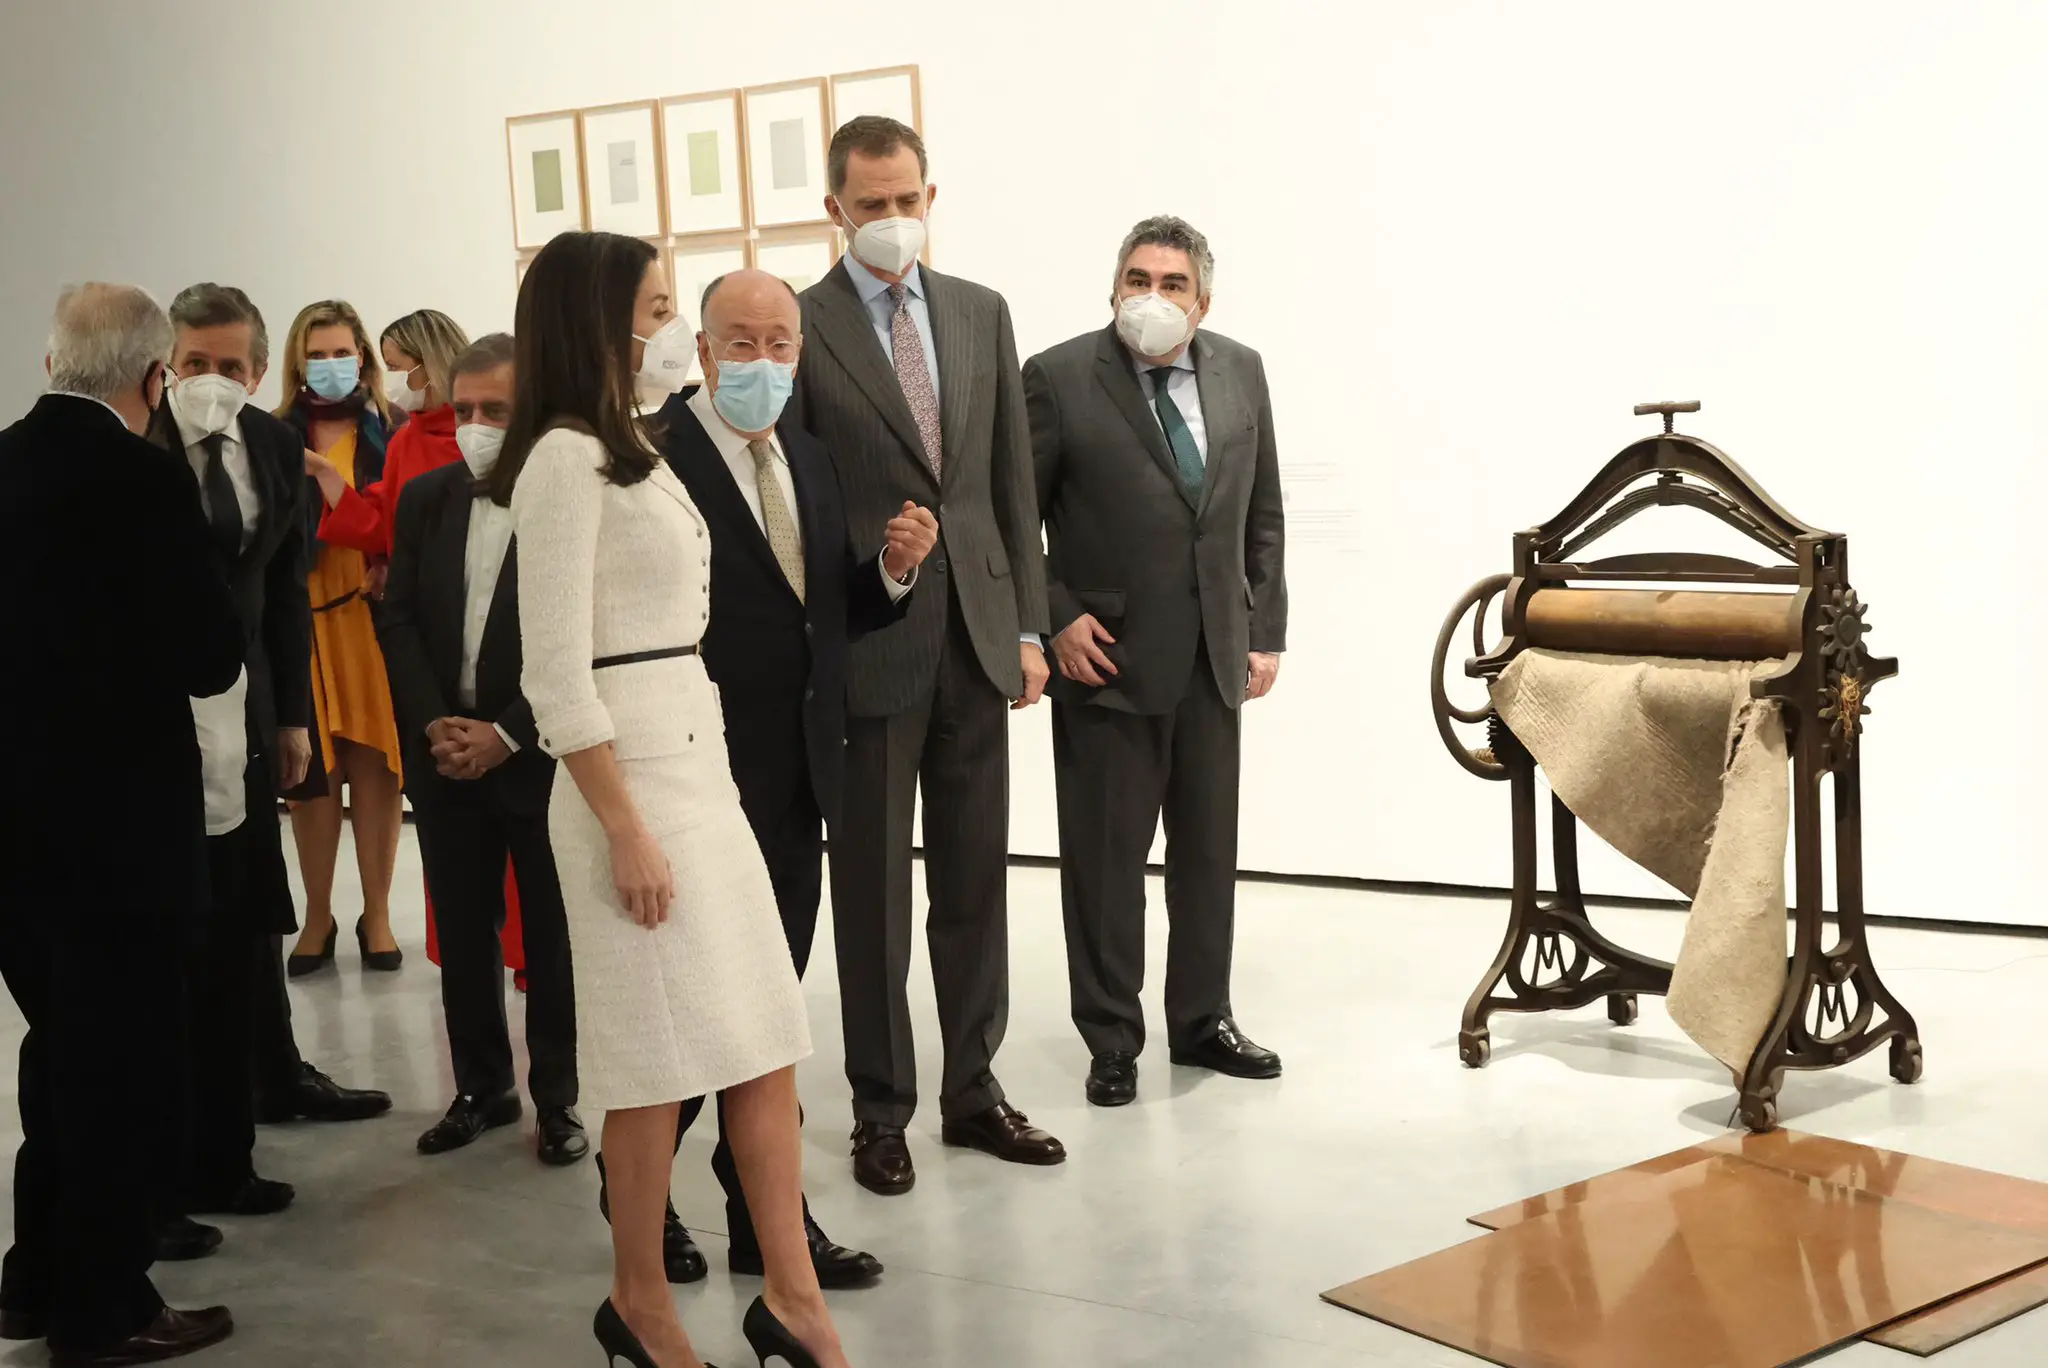 Spanish King Felipe VI and Queen Letizia were visiting Cáceres to inaugurate the Helga de Alvear Foundation museum